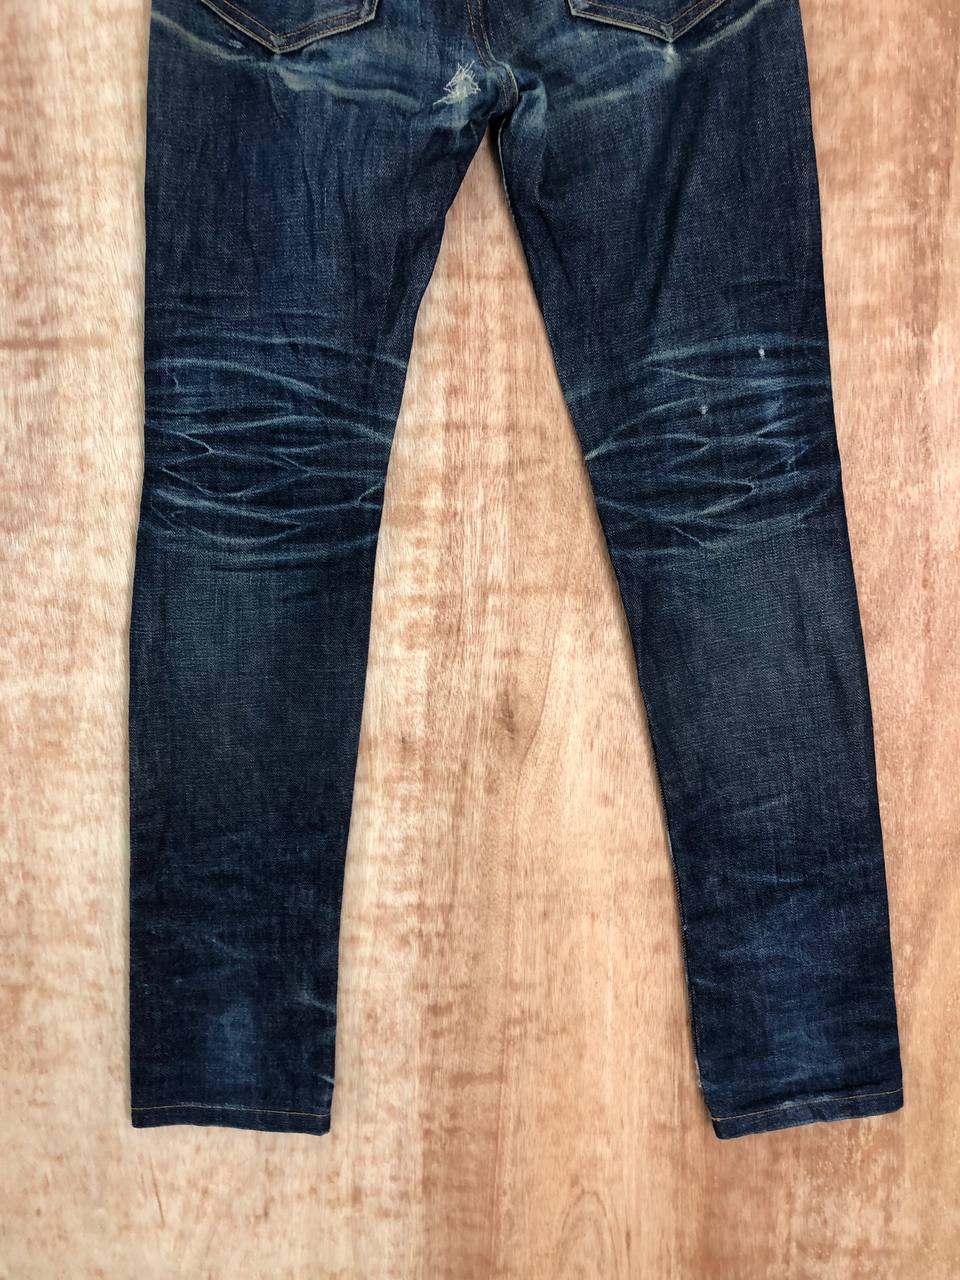 APC Petit Standard Jeans Distressed Selvedge - 14